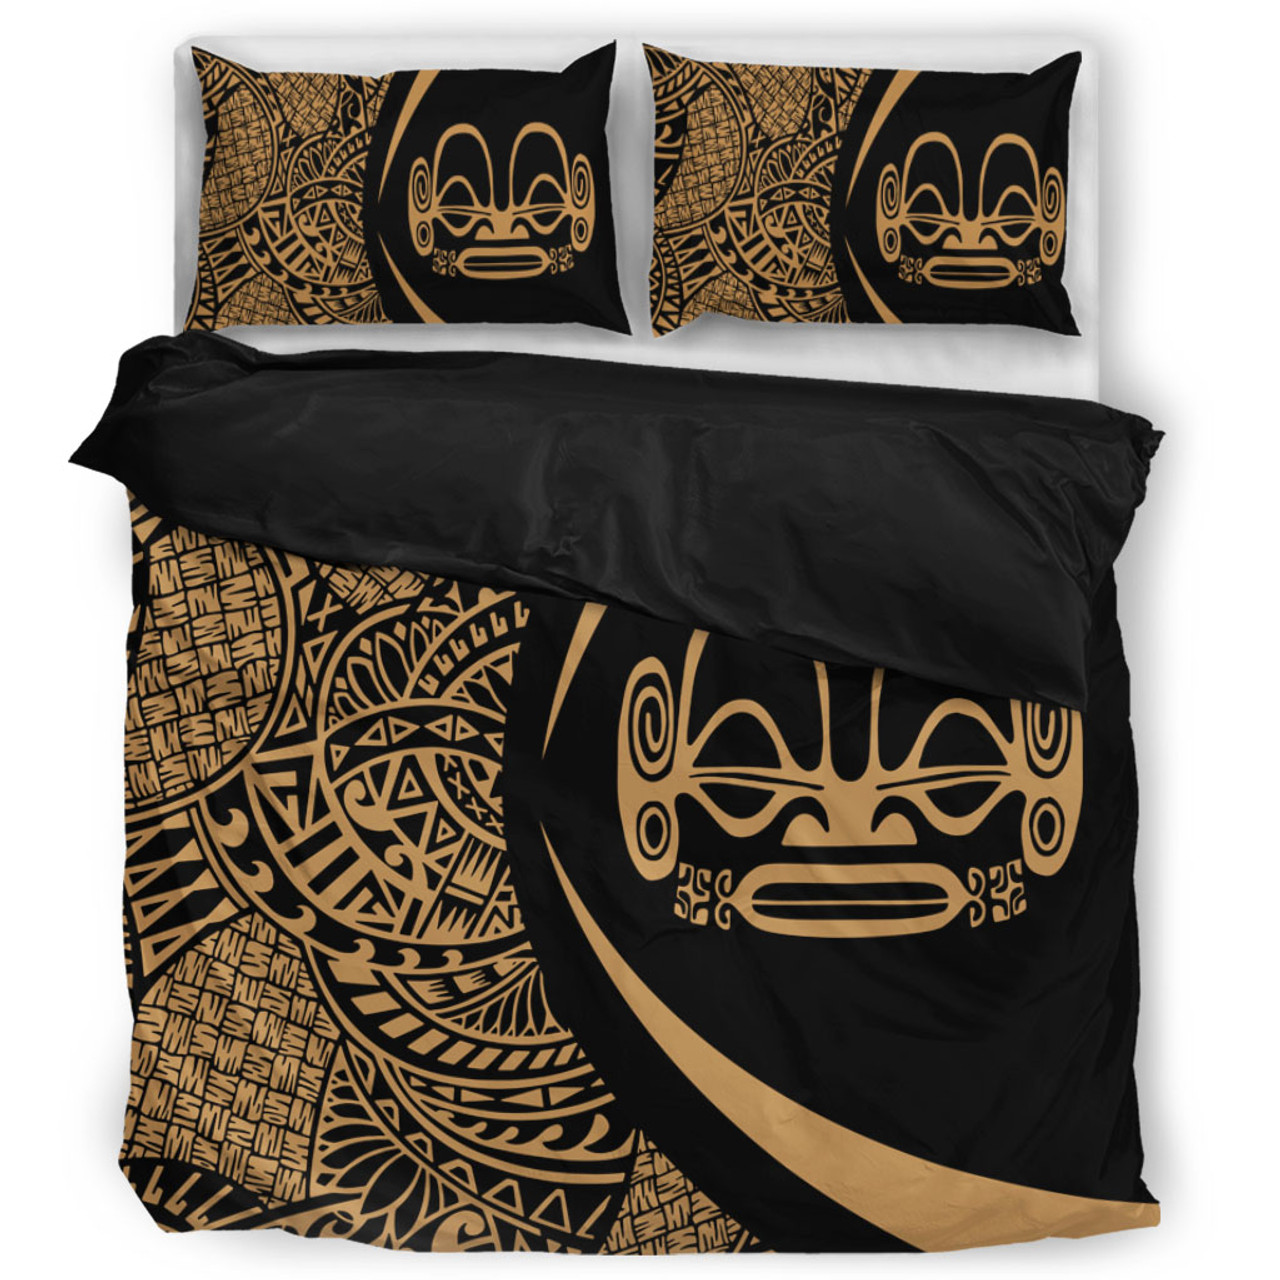 Marquesas Islands Bedding Set Lauhala Gold Circle Style